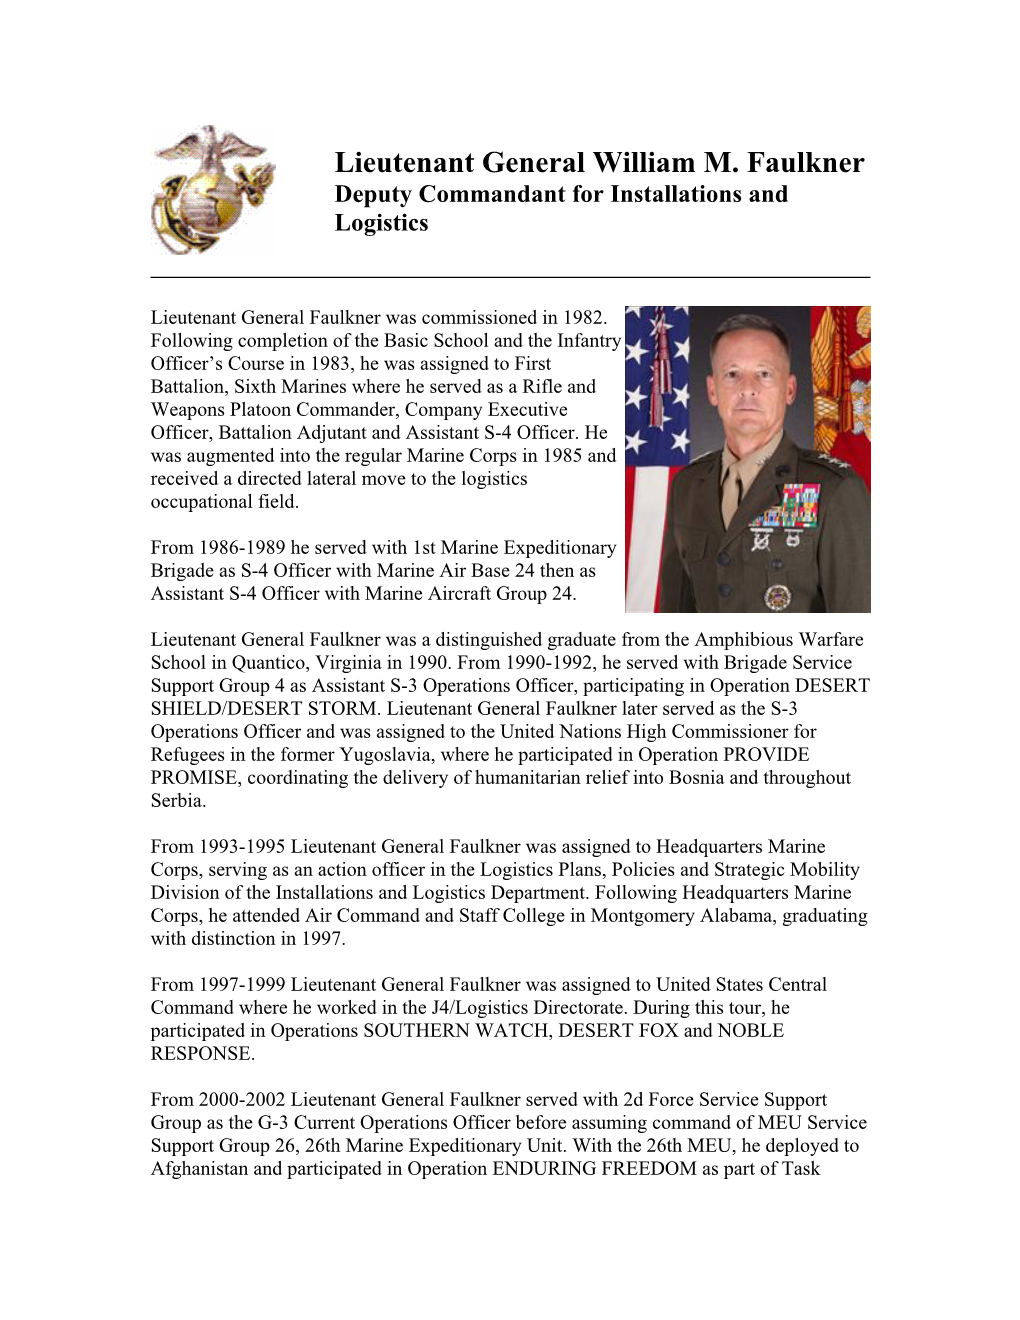 Official Biography: Lieutenant General William M. Faulkner